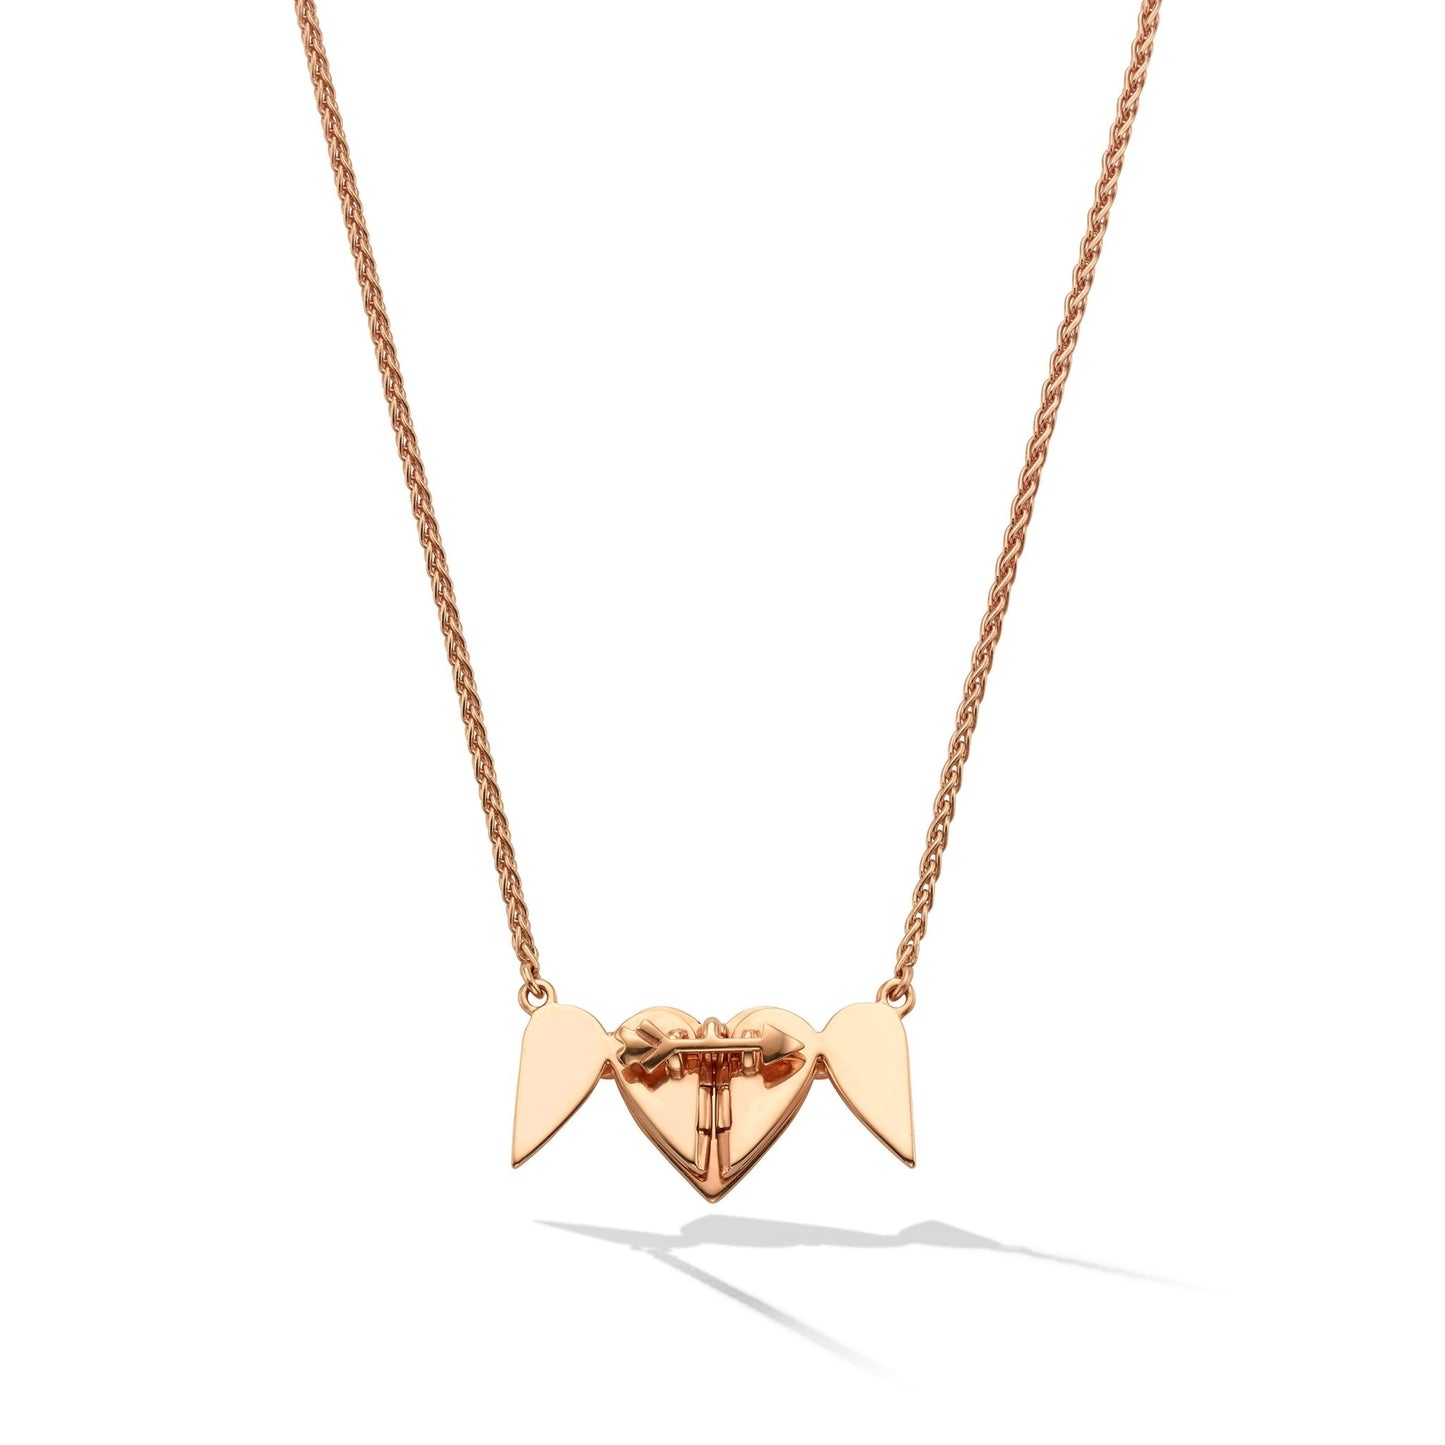 Rose Gold Endless 3 Heart Necklace - Cadar